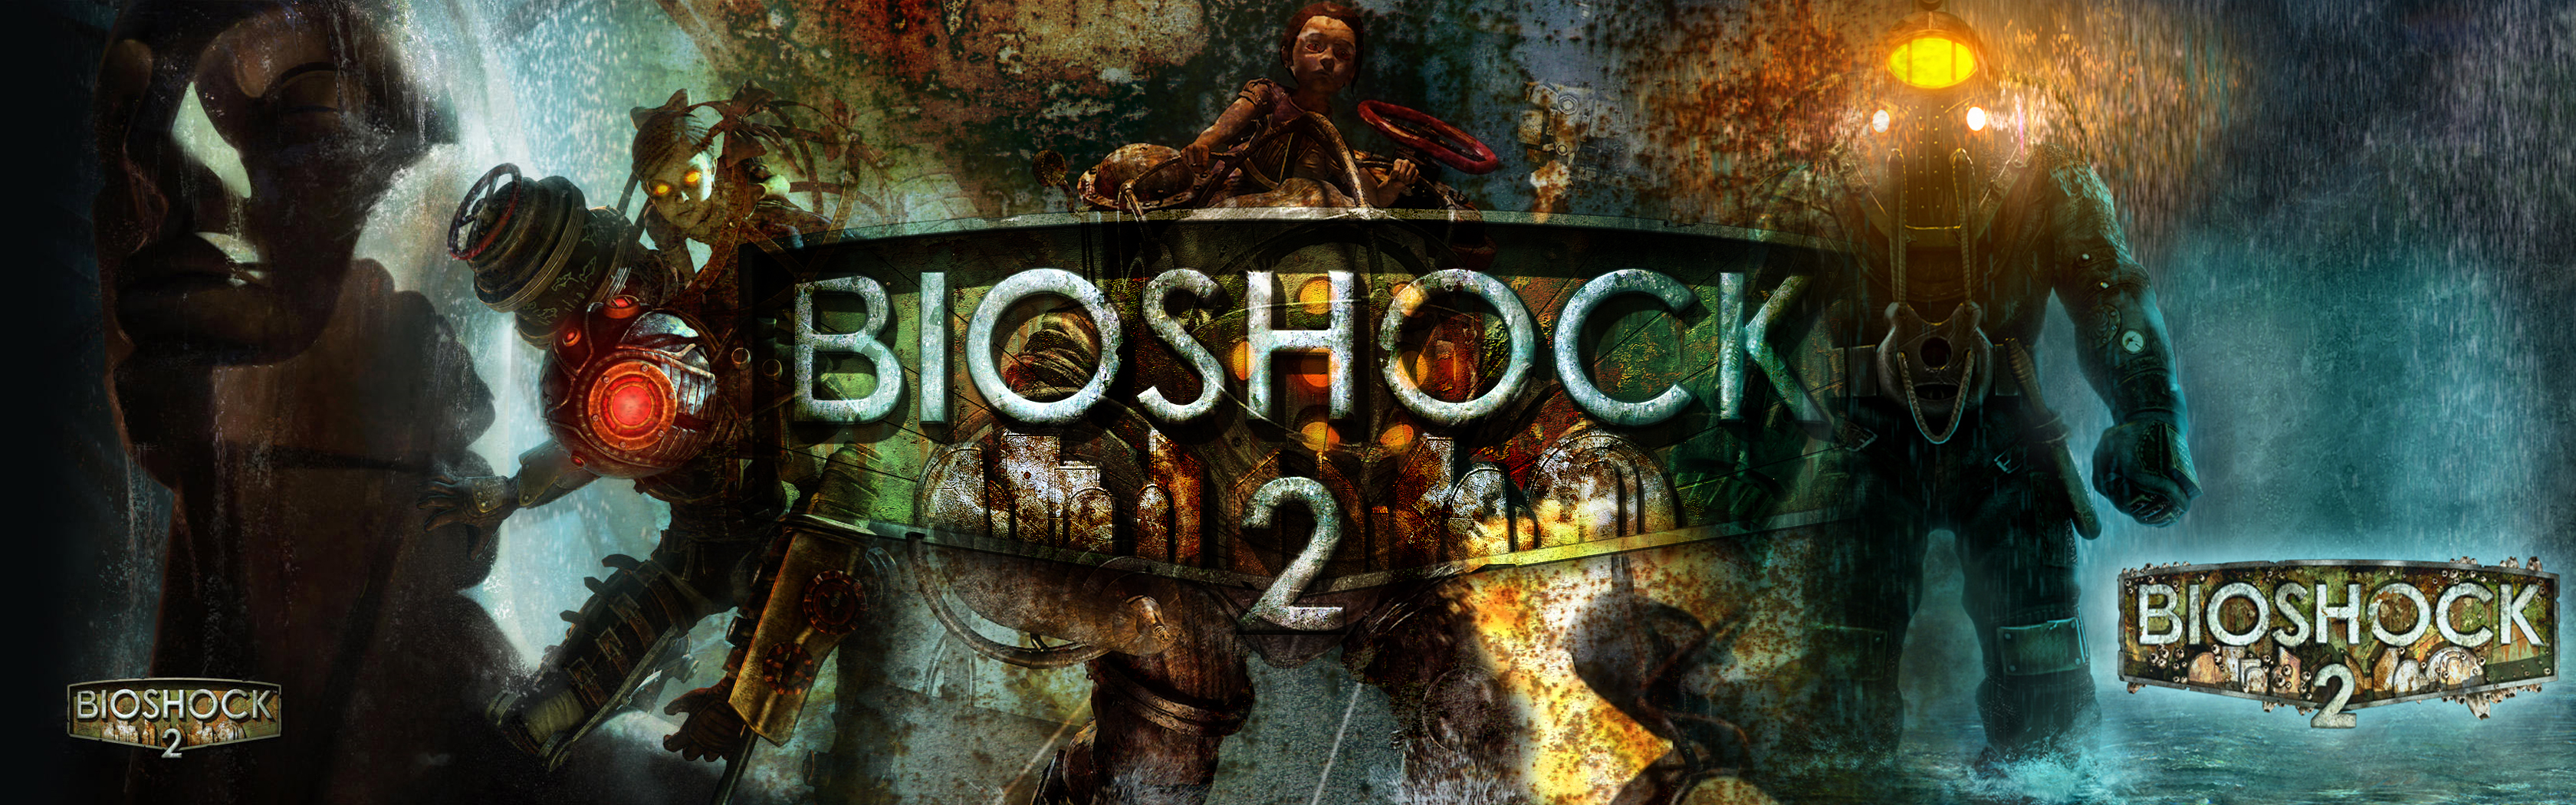 Video Game Bioshock 2 3360x1050